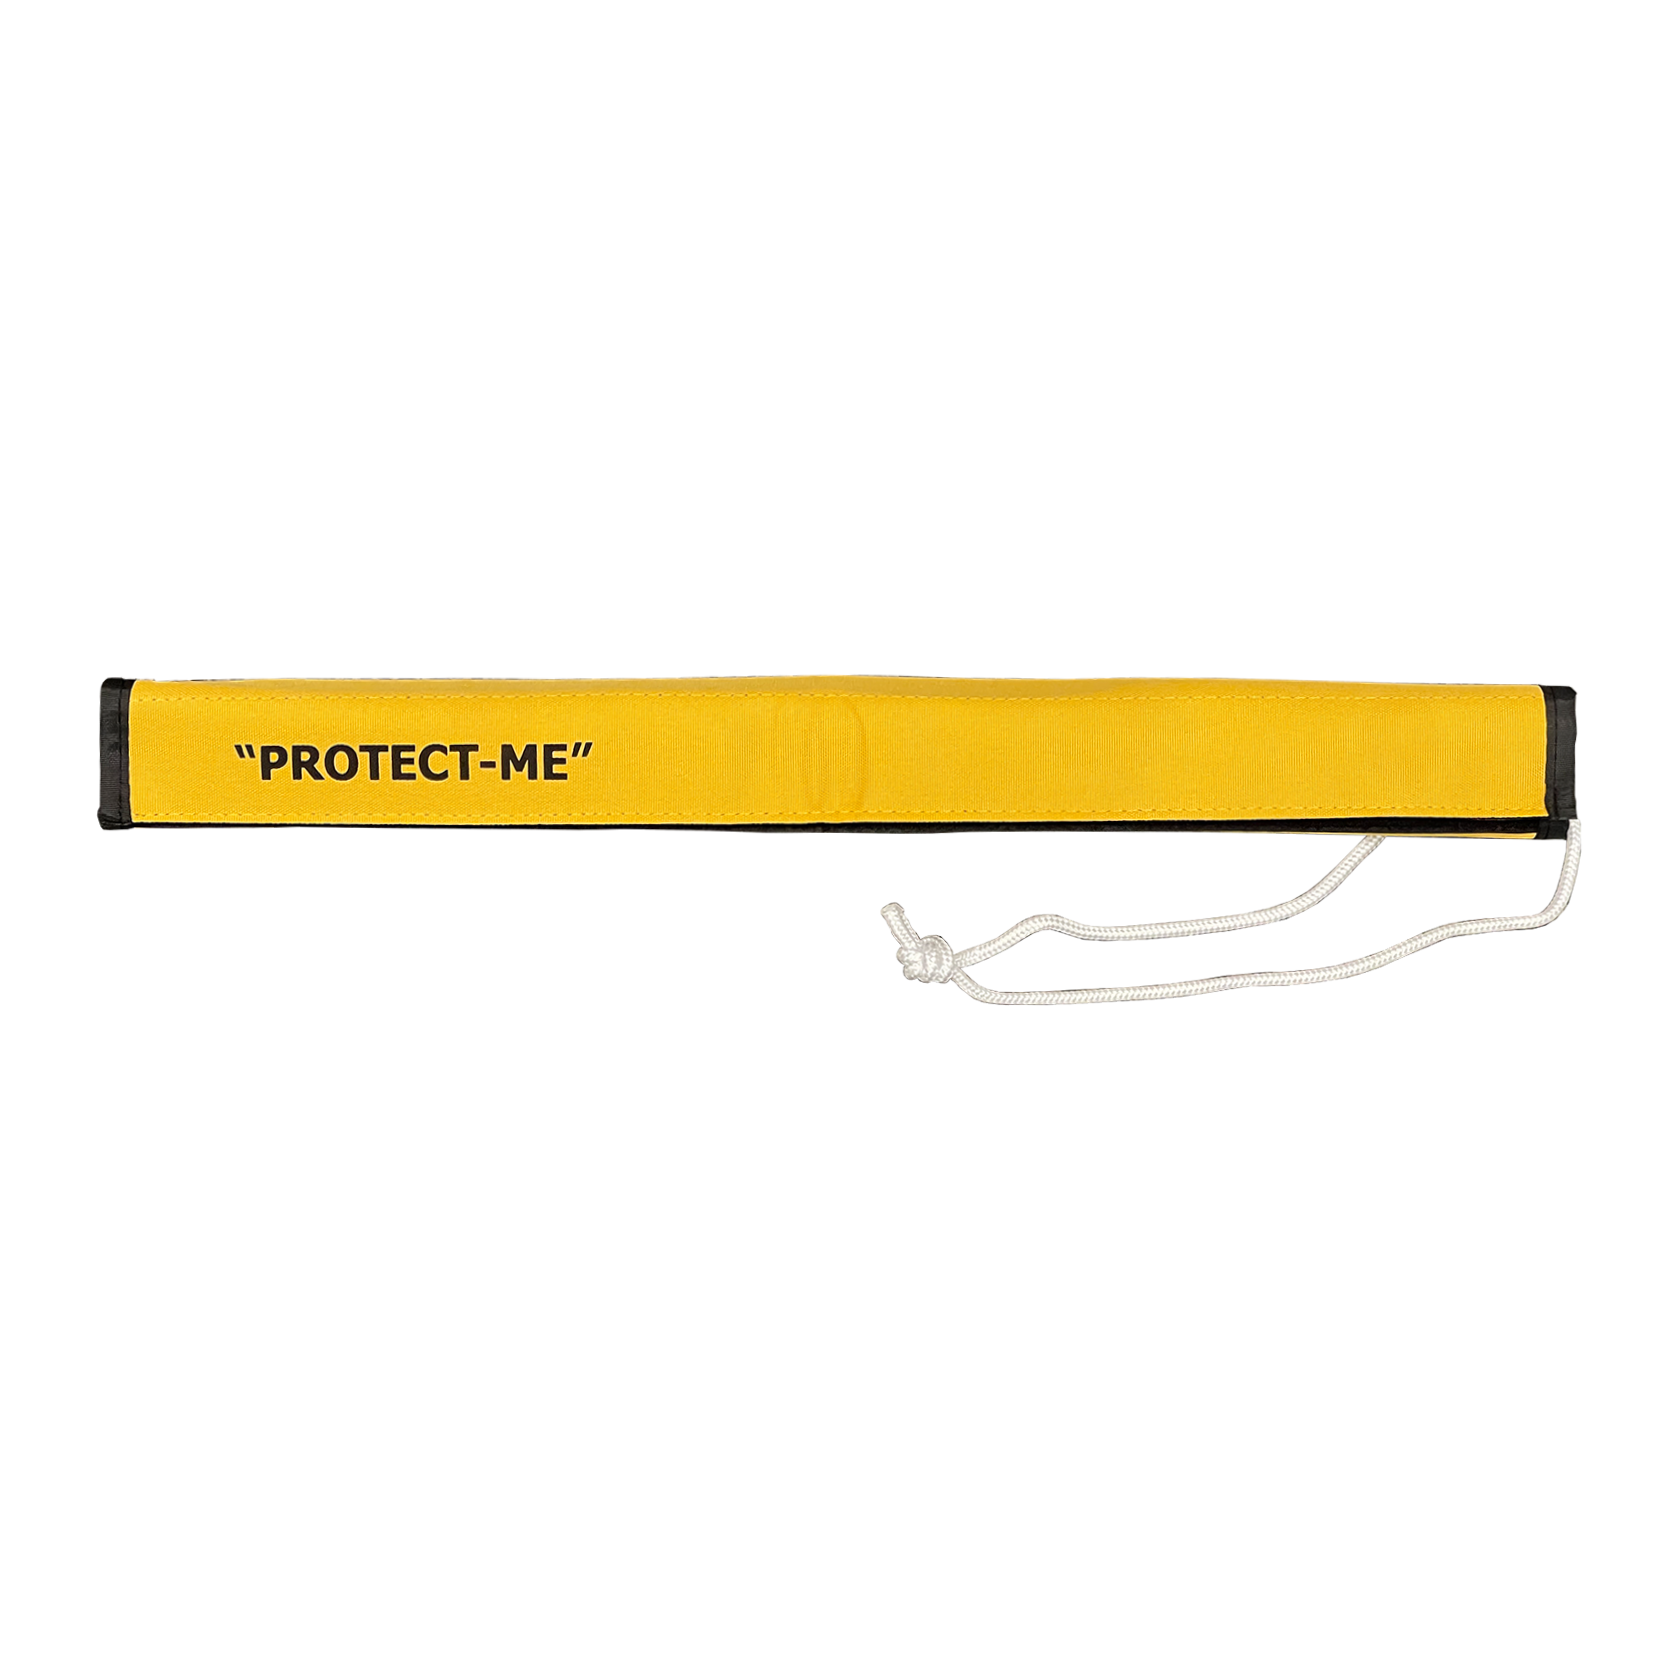 PROTECT-ME Lifeline Insulator Brochure